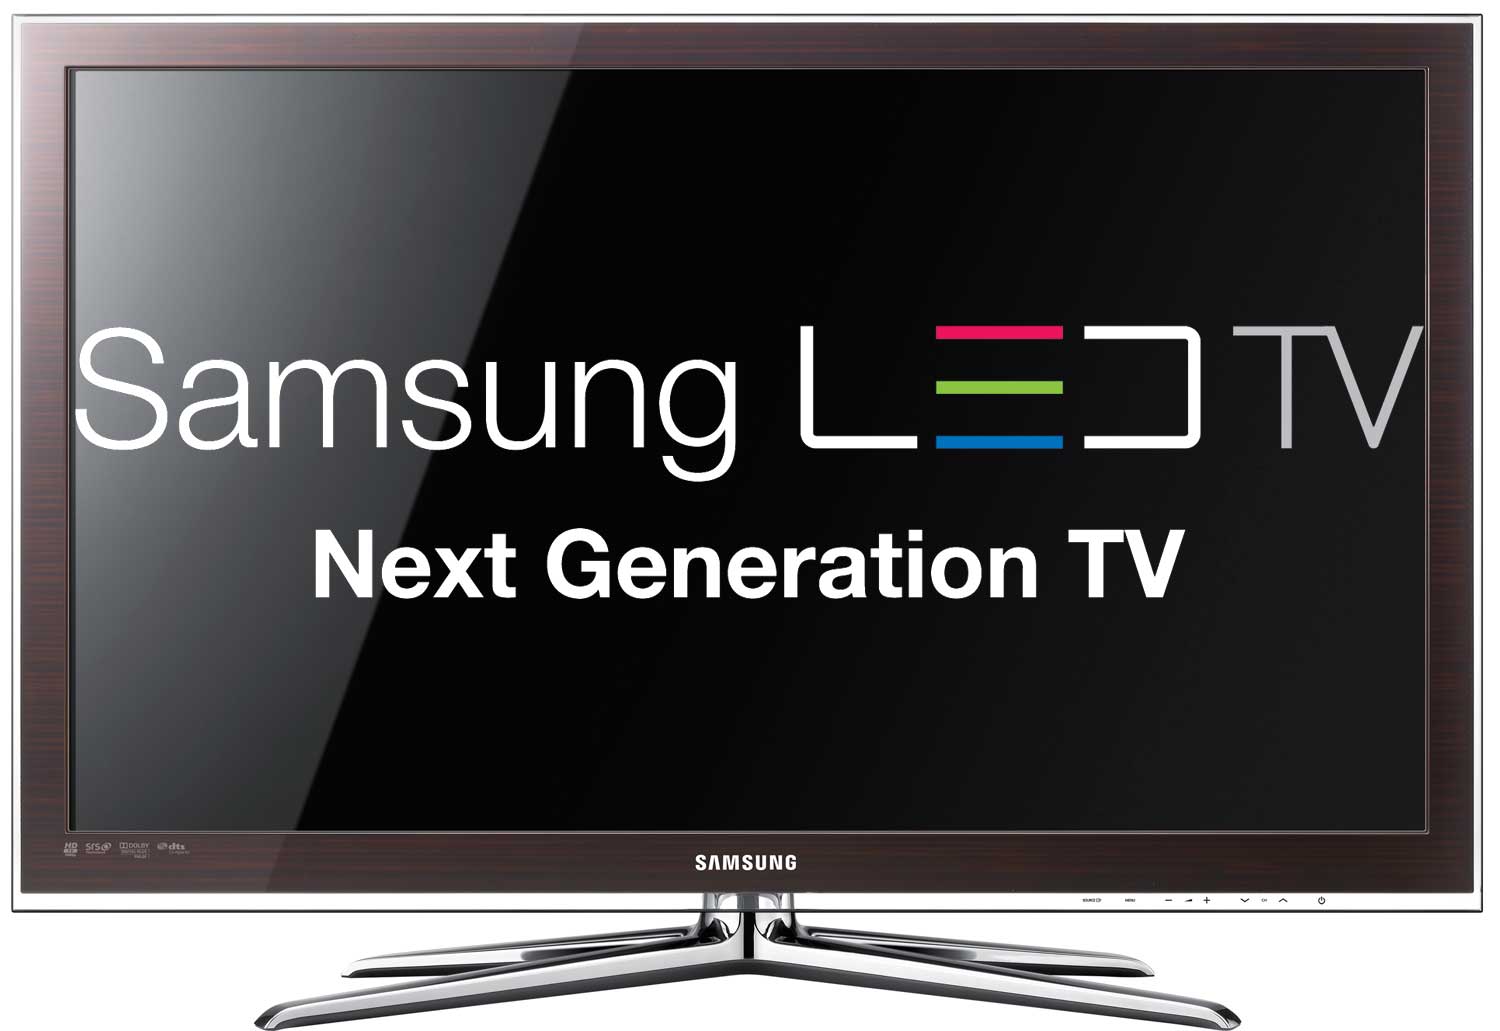 Samsung-LED-TV-001d1